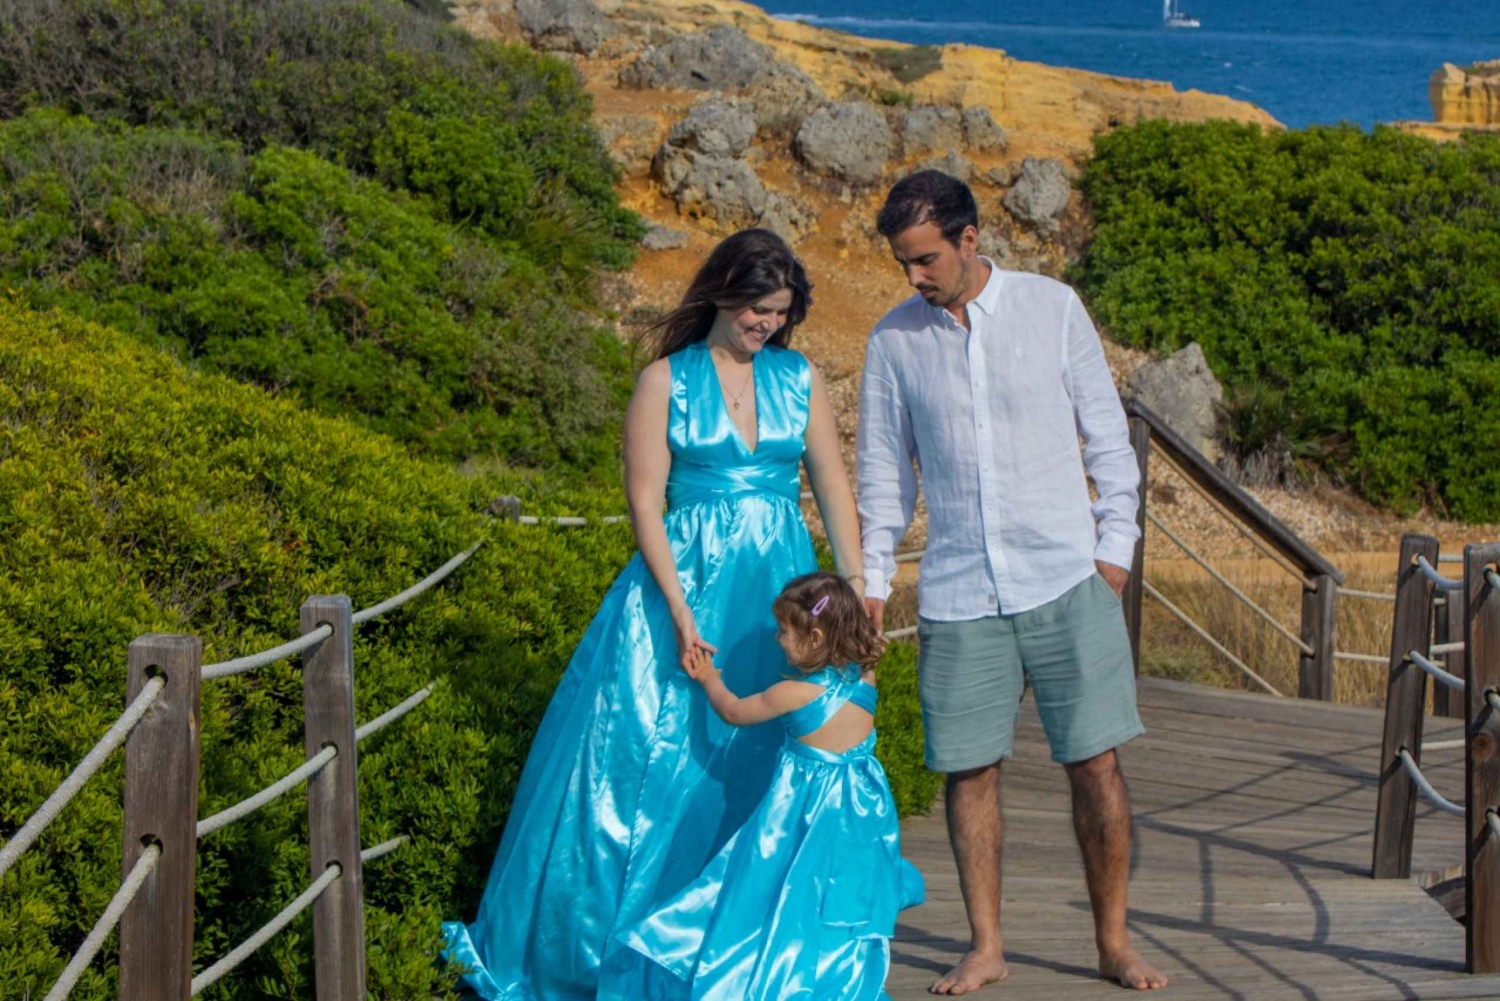 Flying Dress Algarve - Family Experience